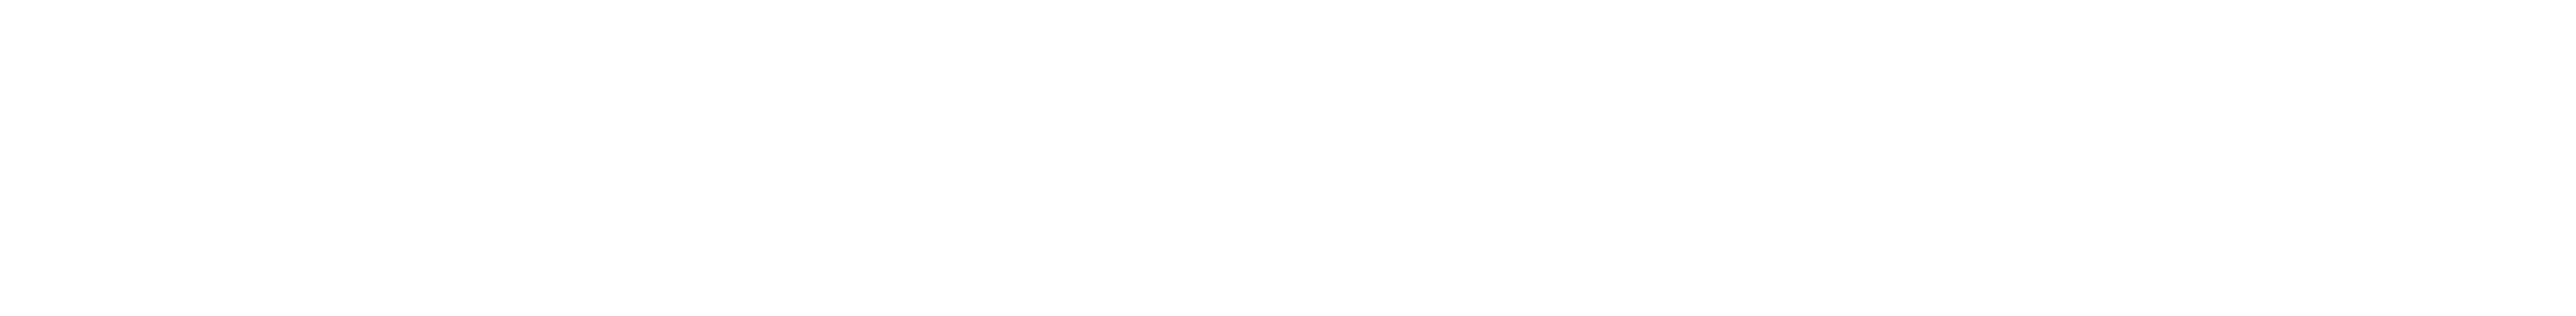 demircan-logo-4